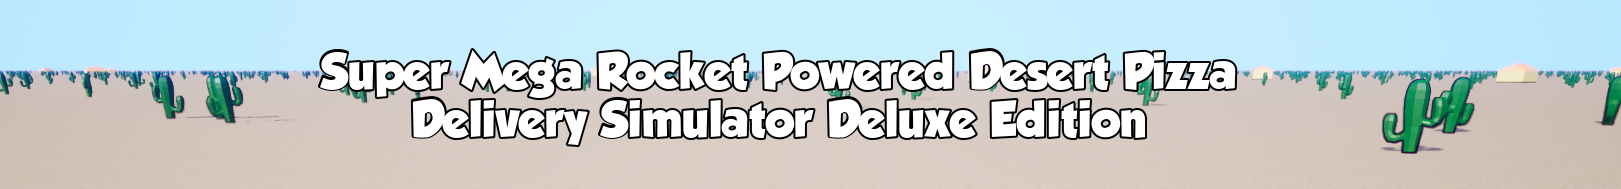 Super Mega Rocket Powered Desert Pizza Delivery Simulator Deluxe Edition